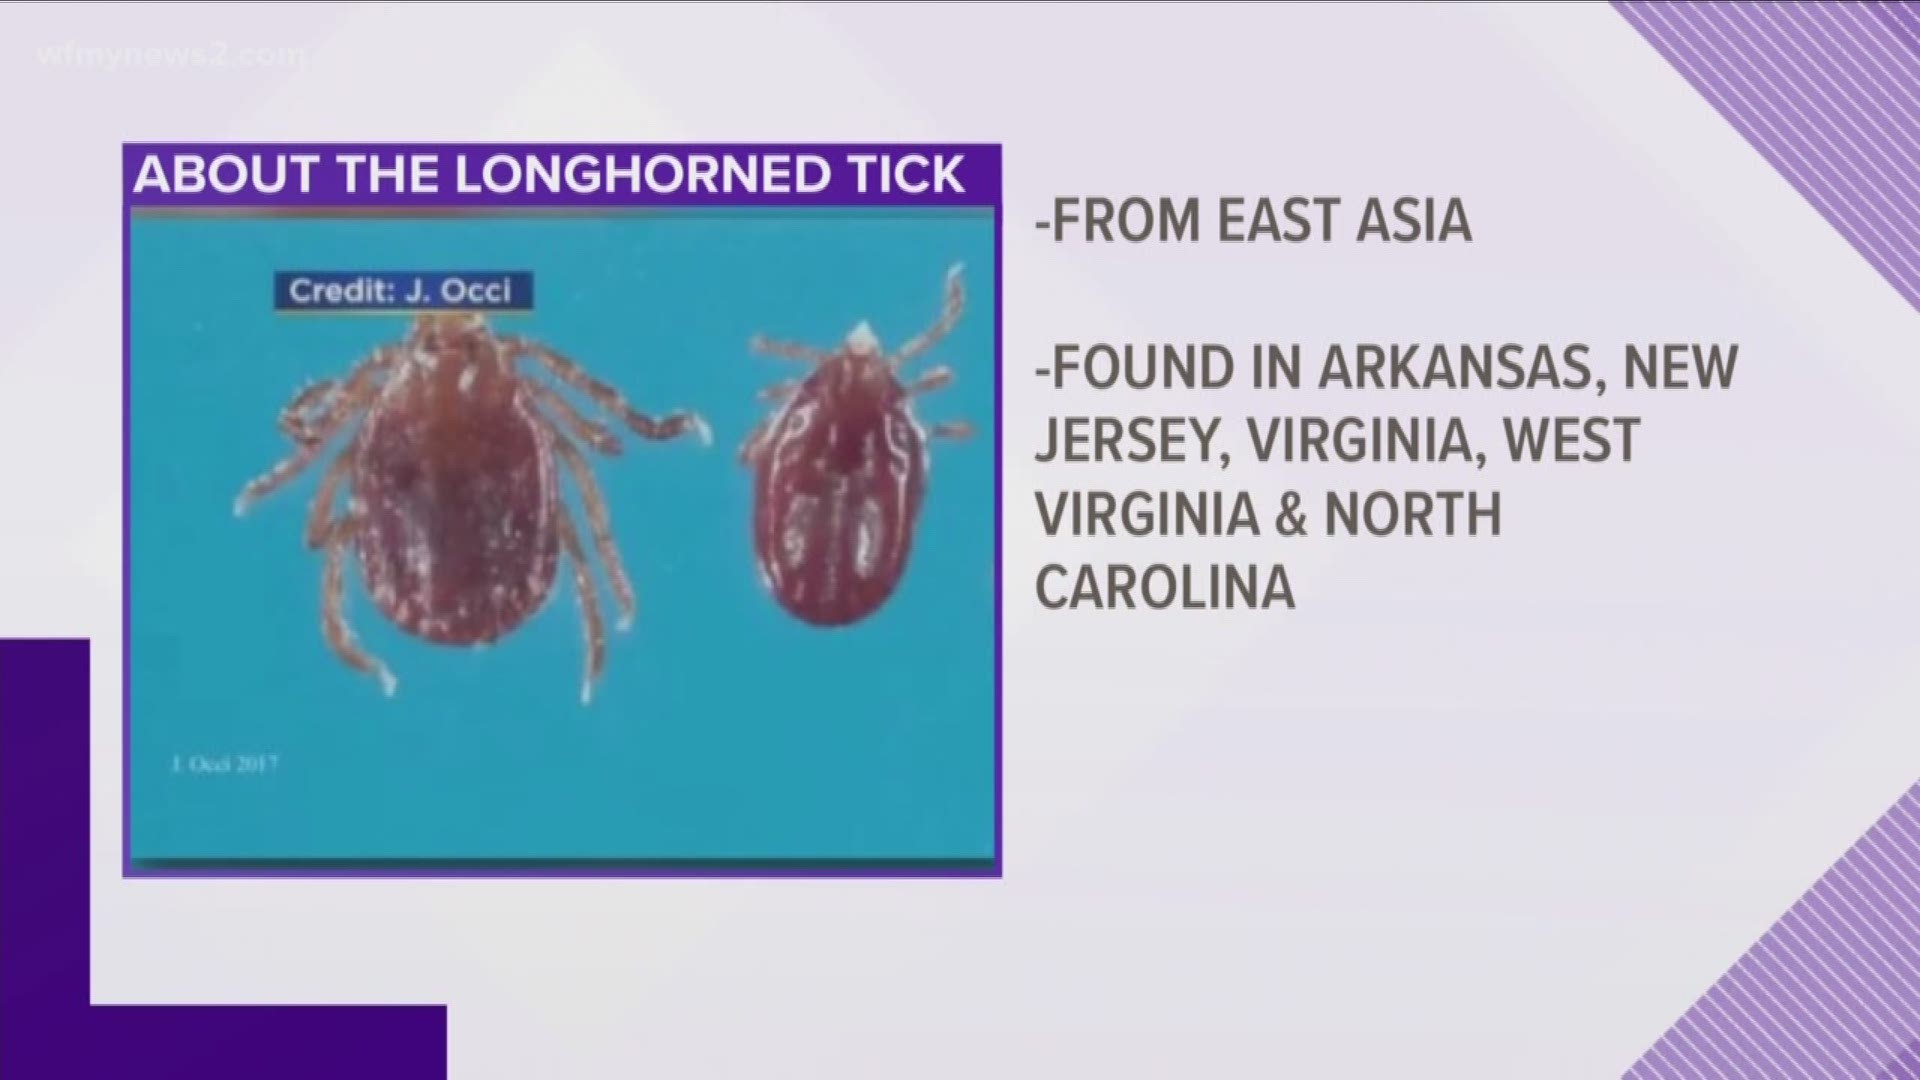 New Tick Species In North Carolina